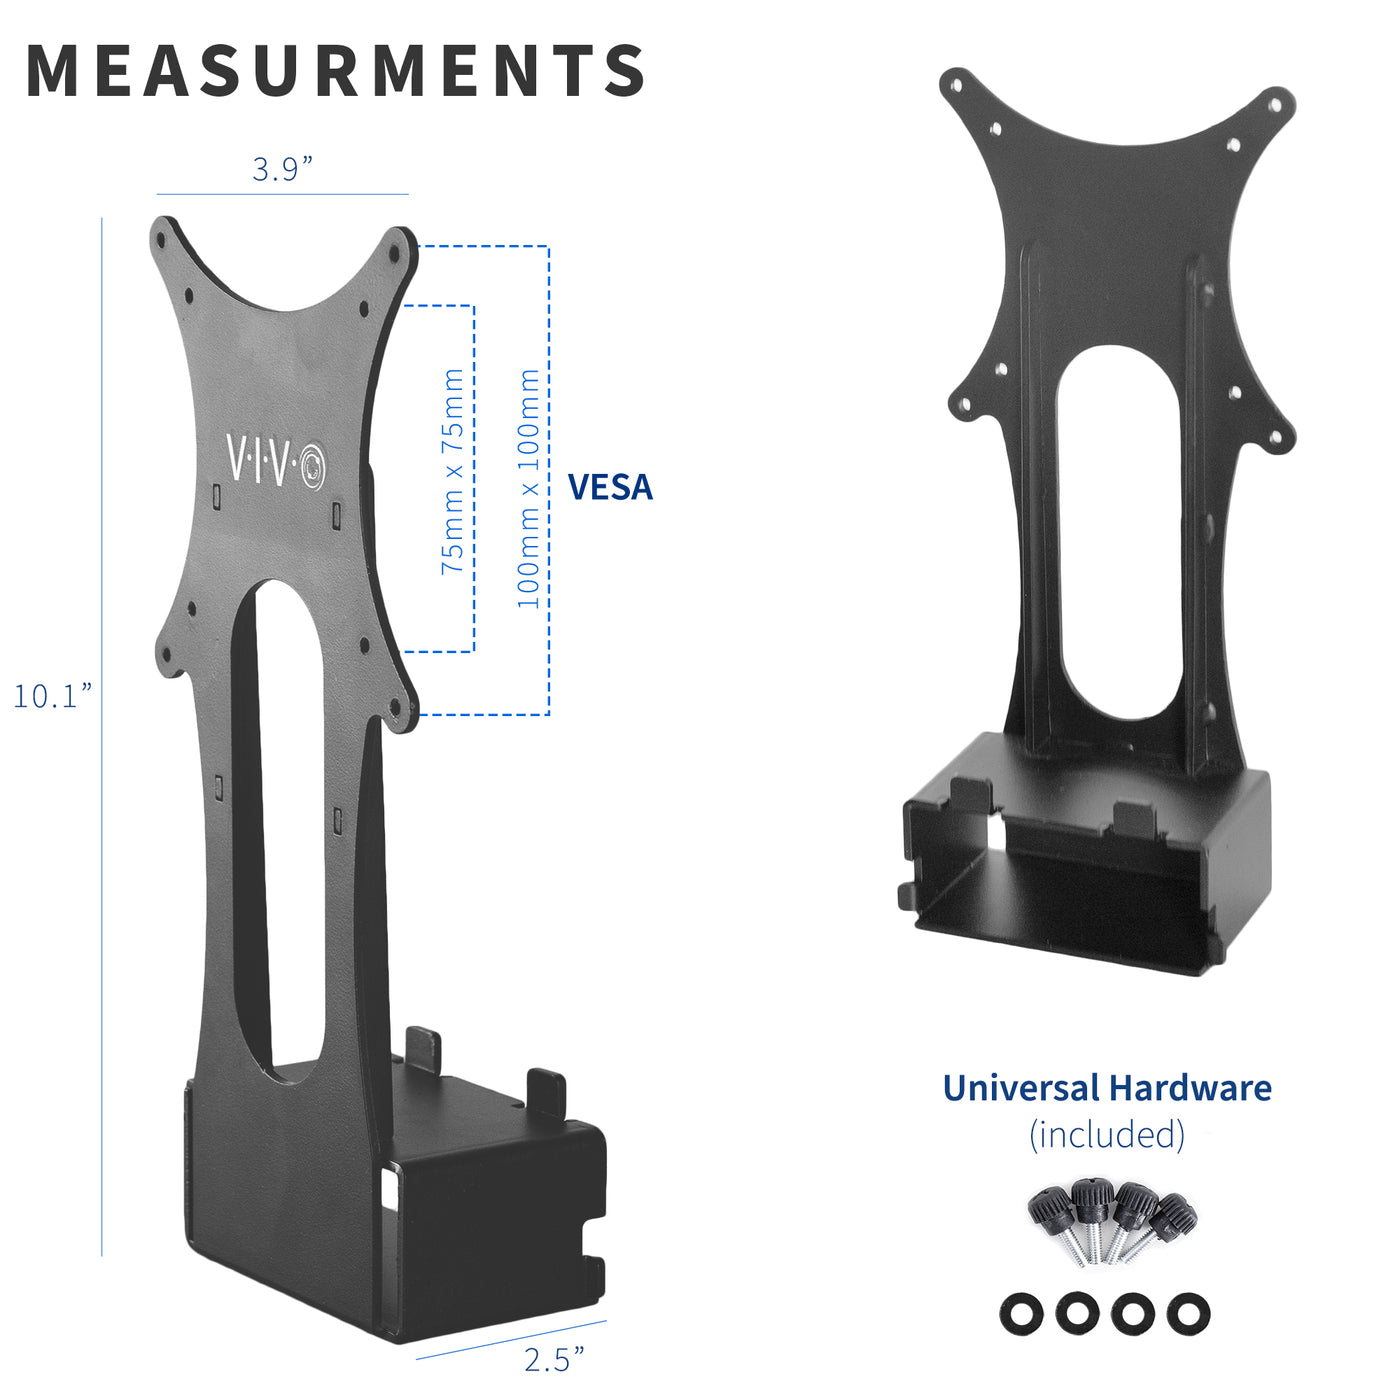 vivo VESA Adapter Plate Bracket Designed for Compatible Samsung Monitors, Black